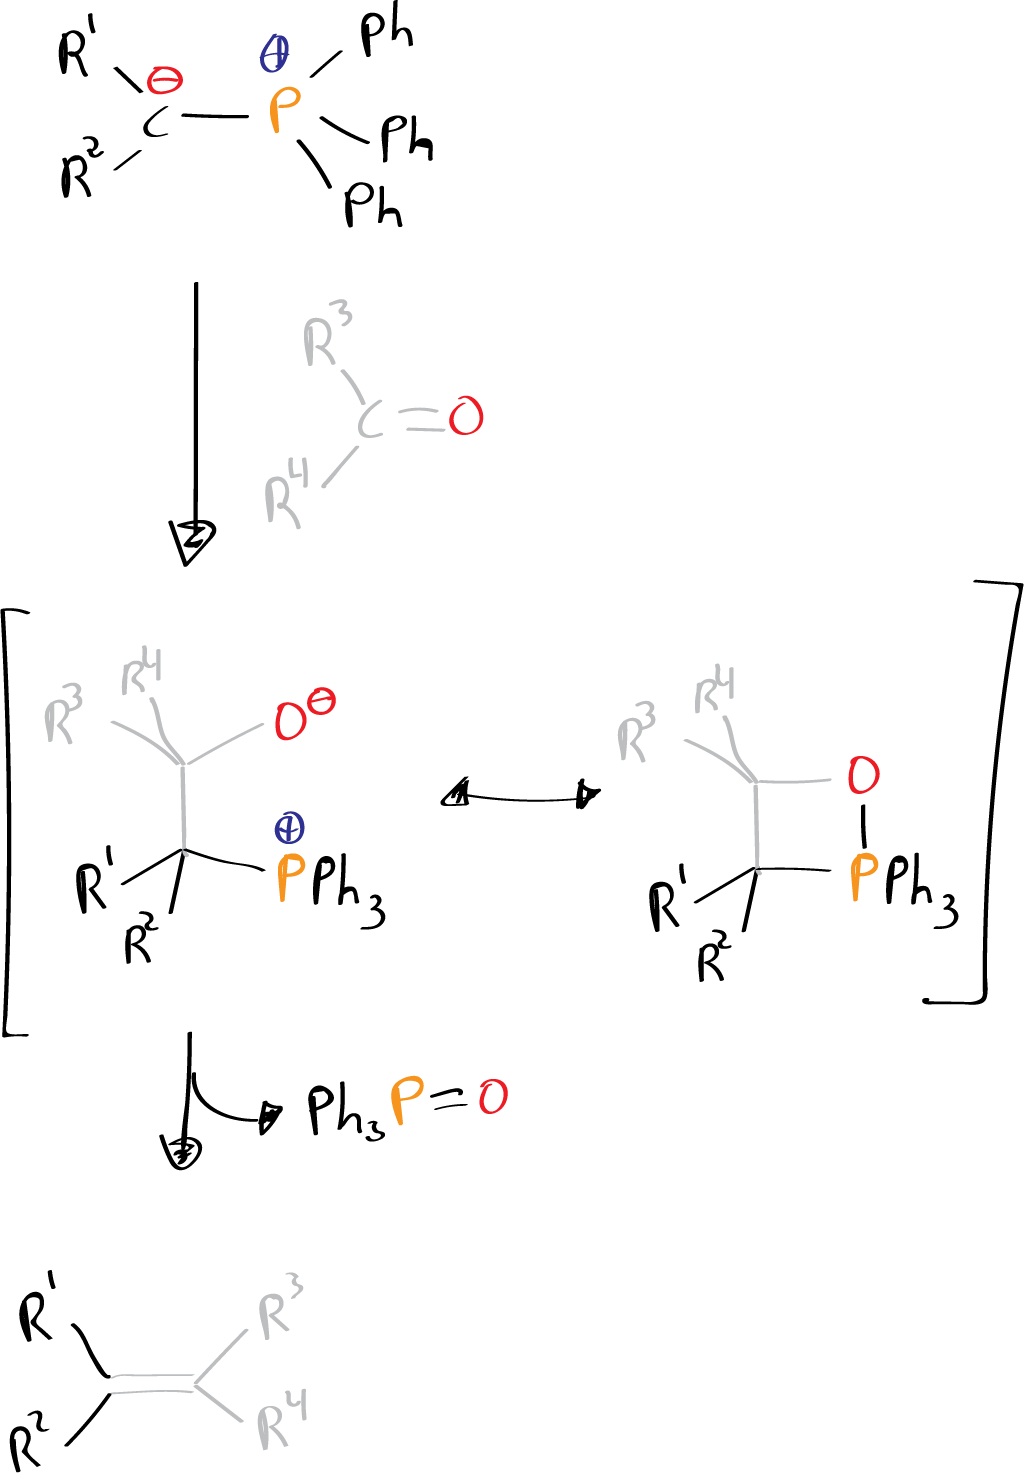 Wittig reaction (cyclic oxaphosphetane) - general reaction scheme - mechanism